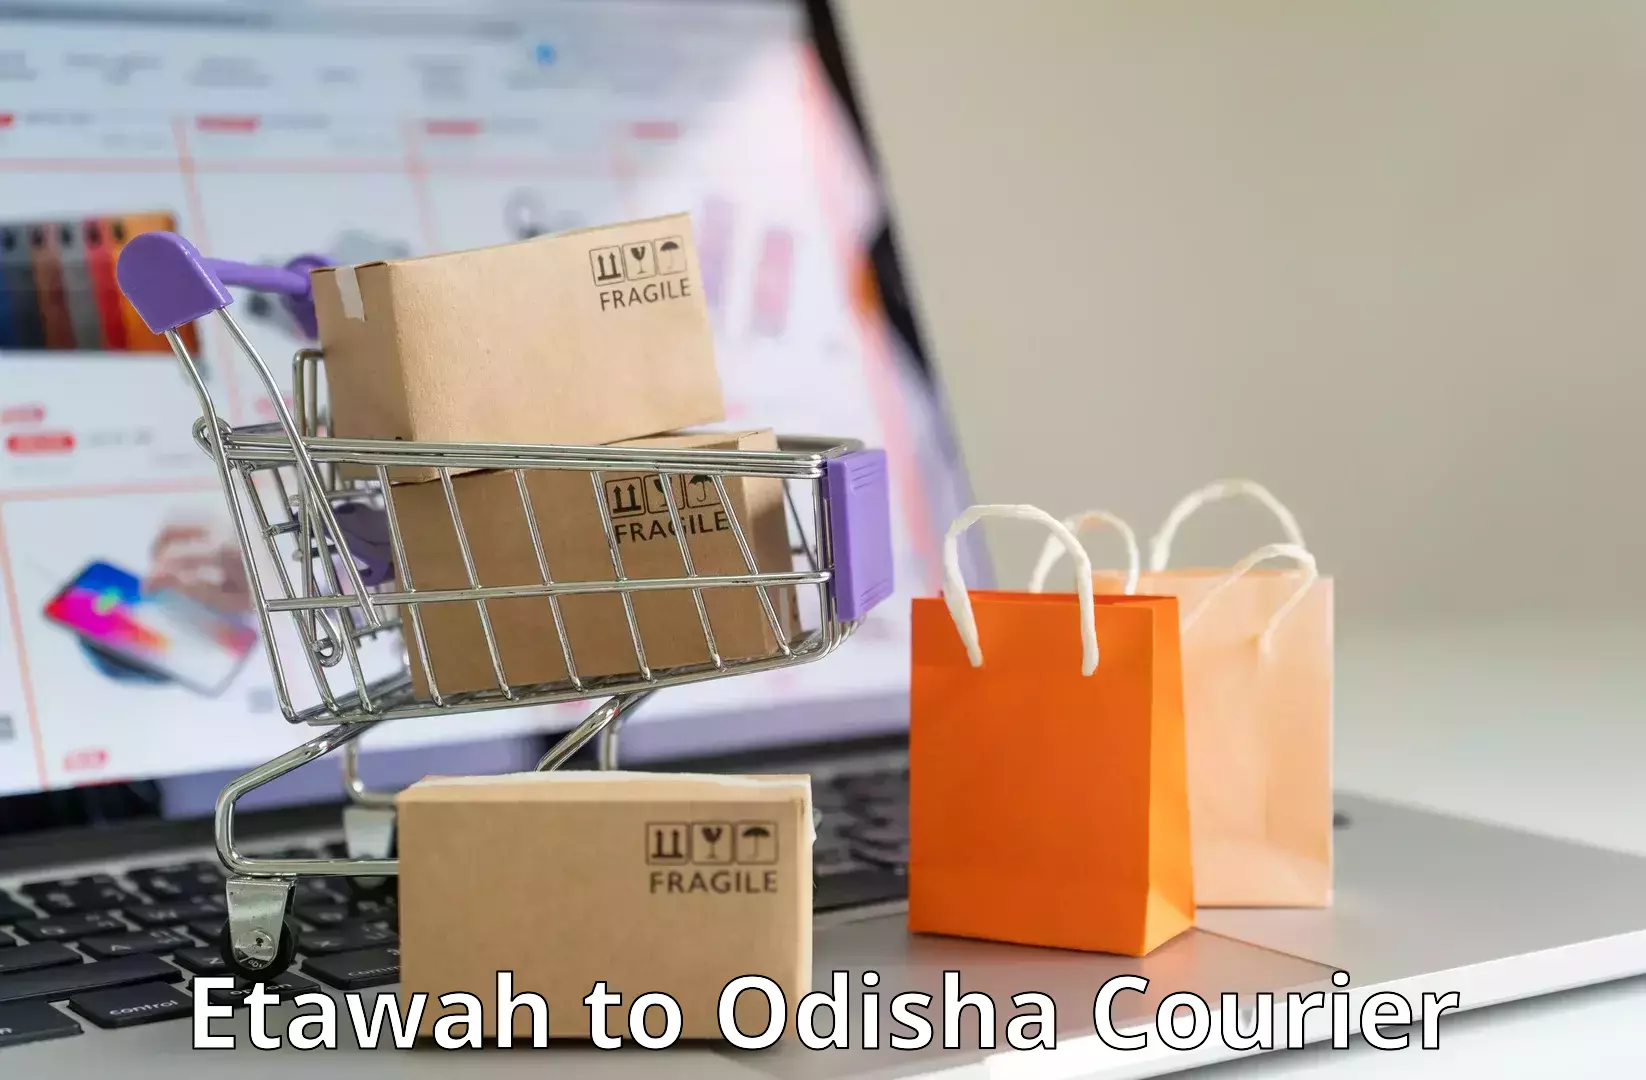 Efficient package consolidation Etawah to Bhadrak